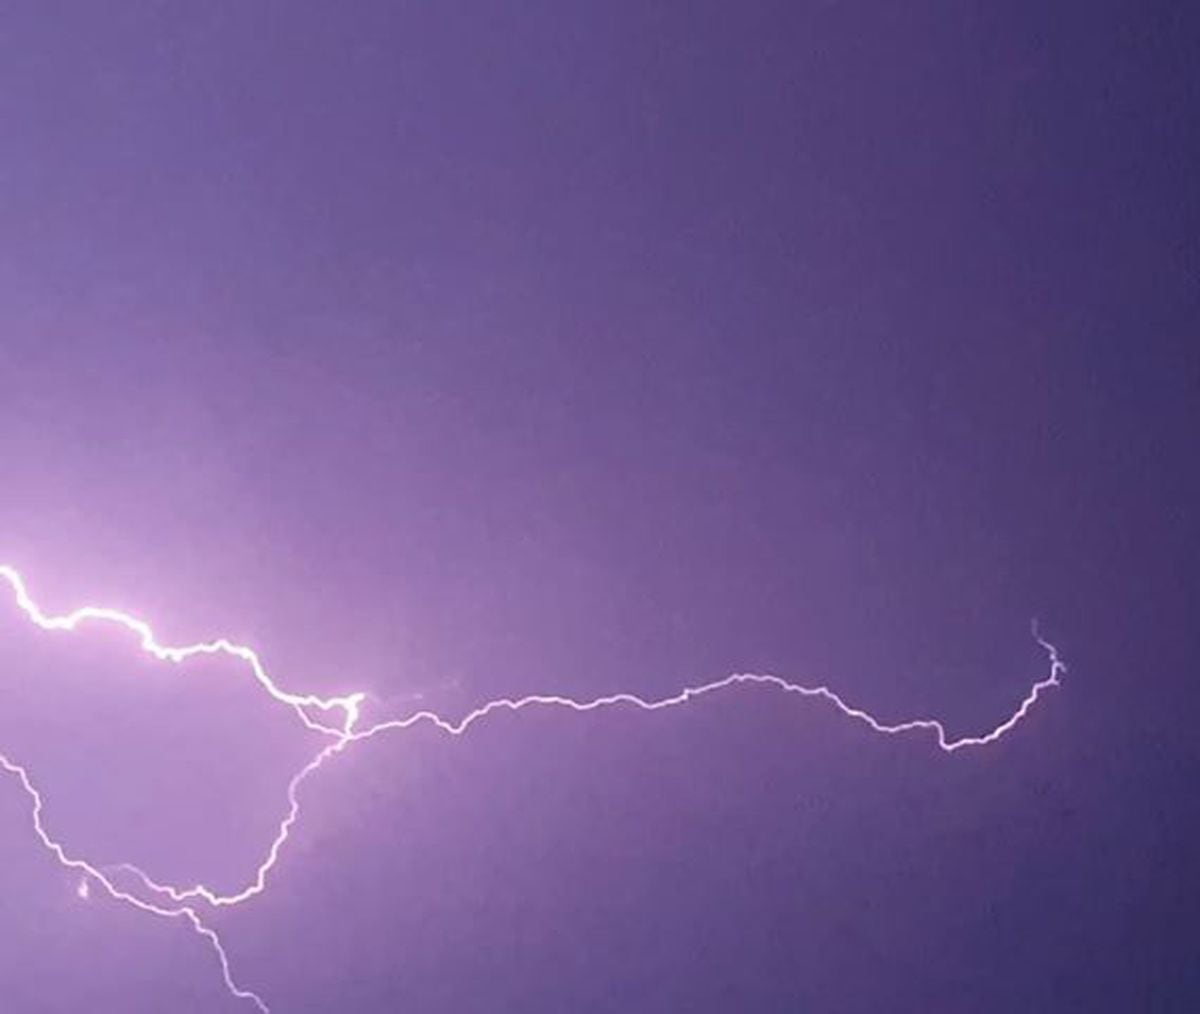 Lightning in Codsall last night pictured by Melanie Cassandra Tomlinson